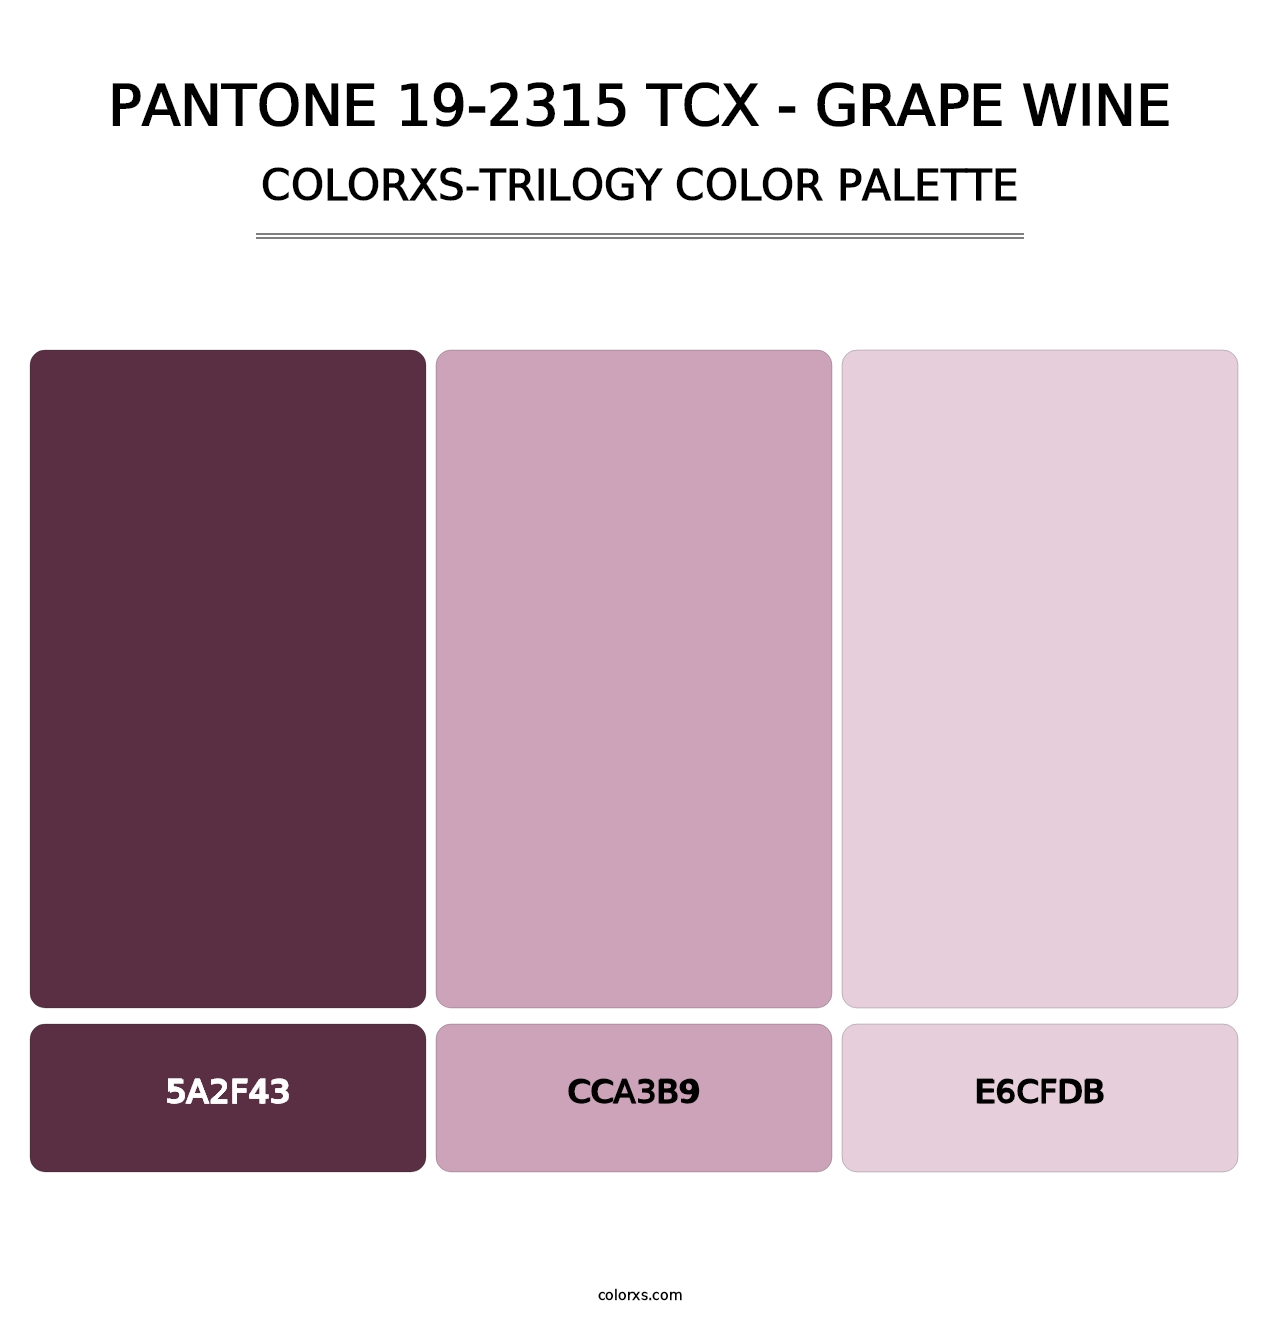 PANTONE 19-2315 TCX - Grape Wine - Colorxs Trilogy Palette